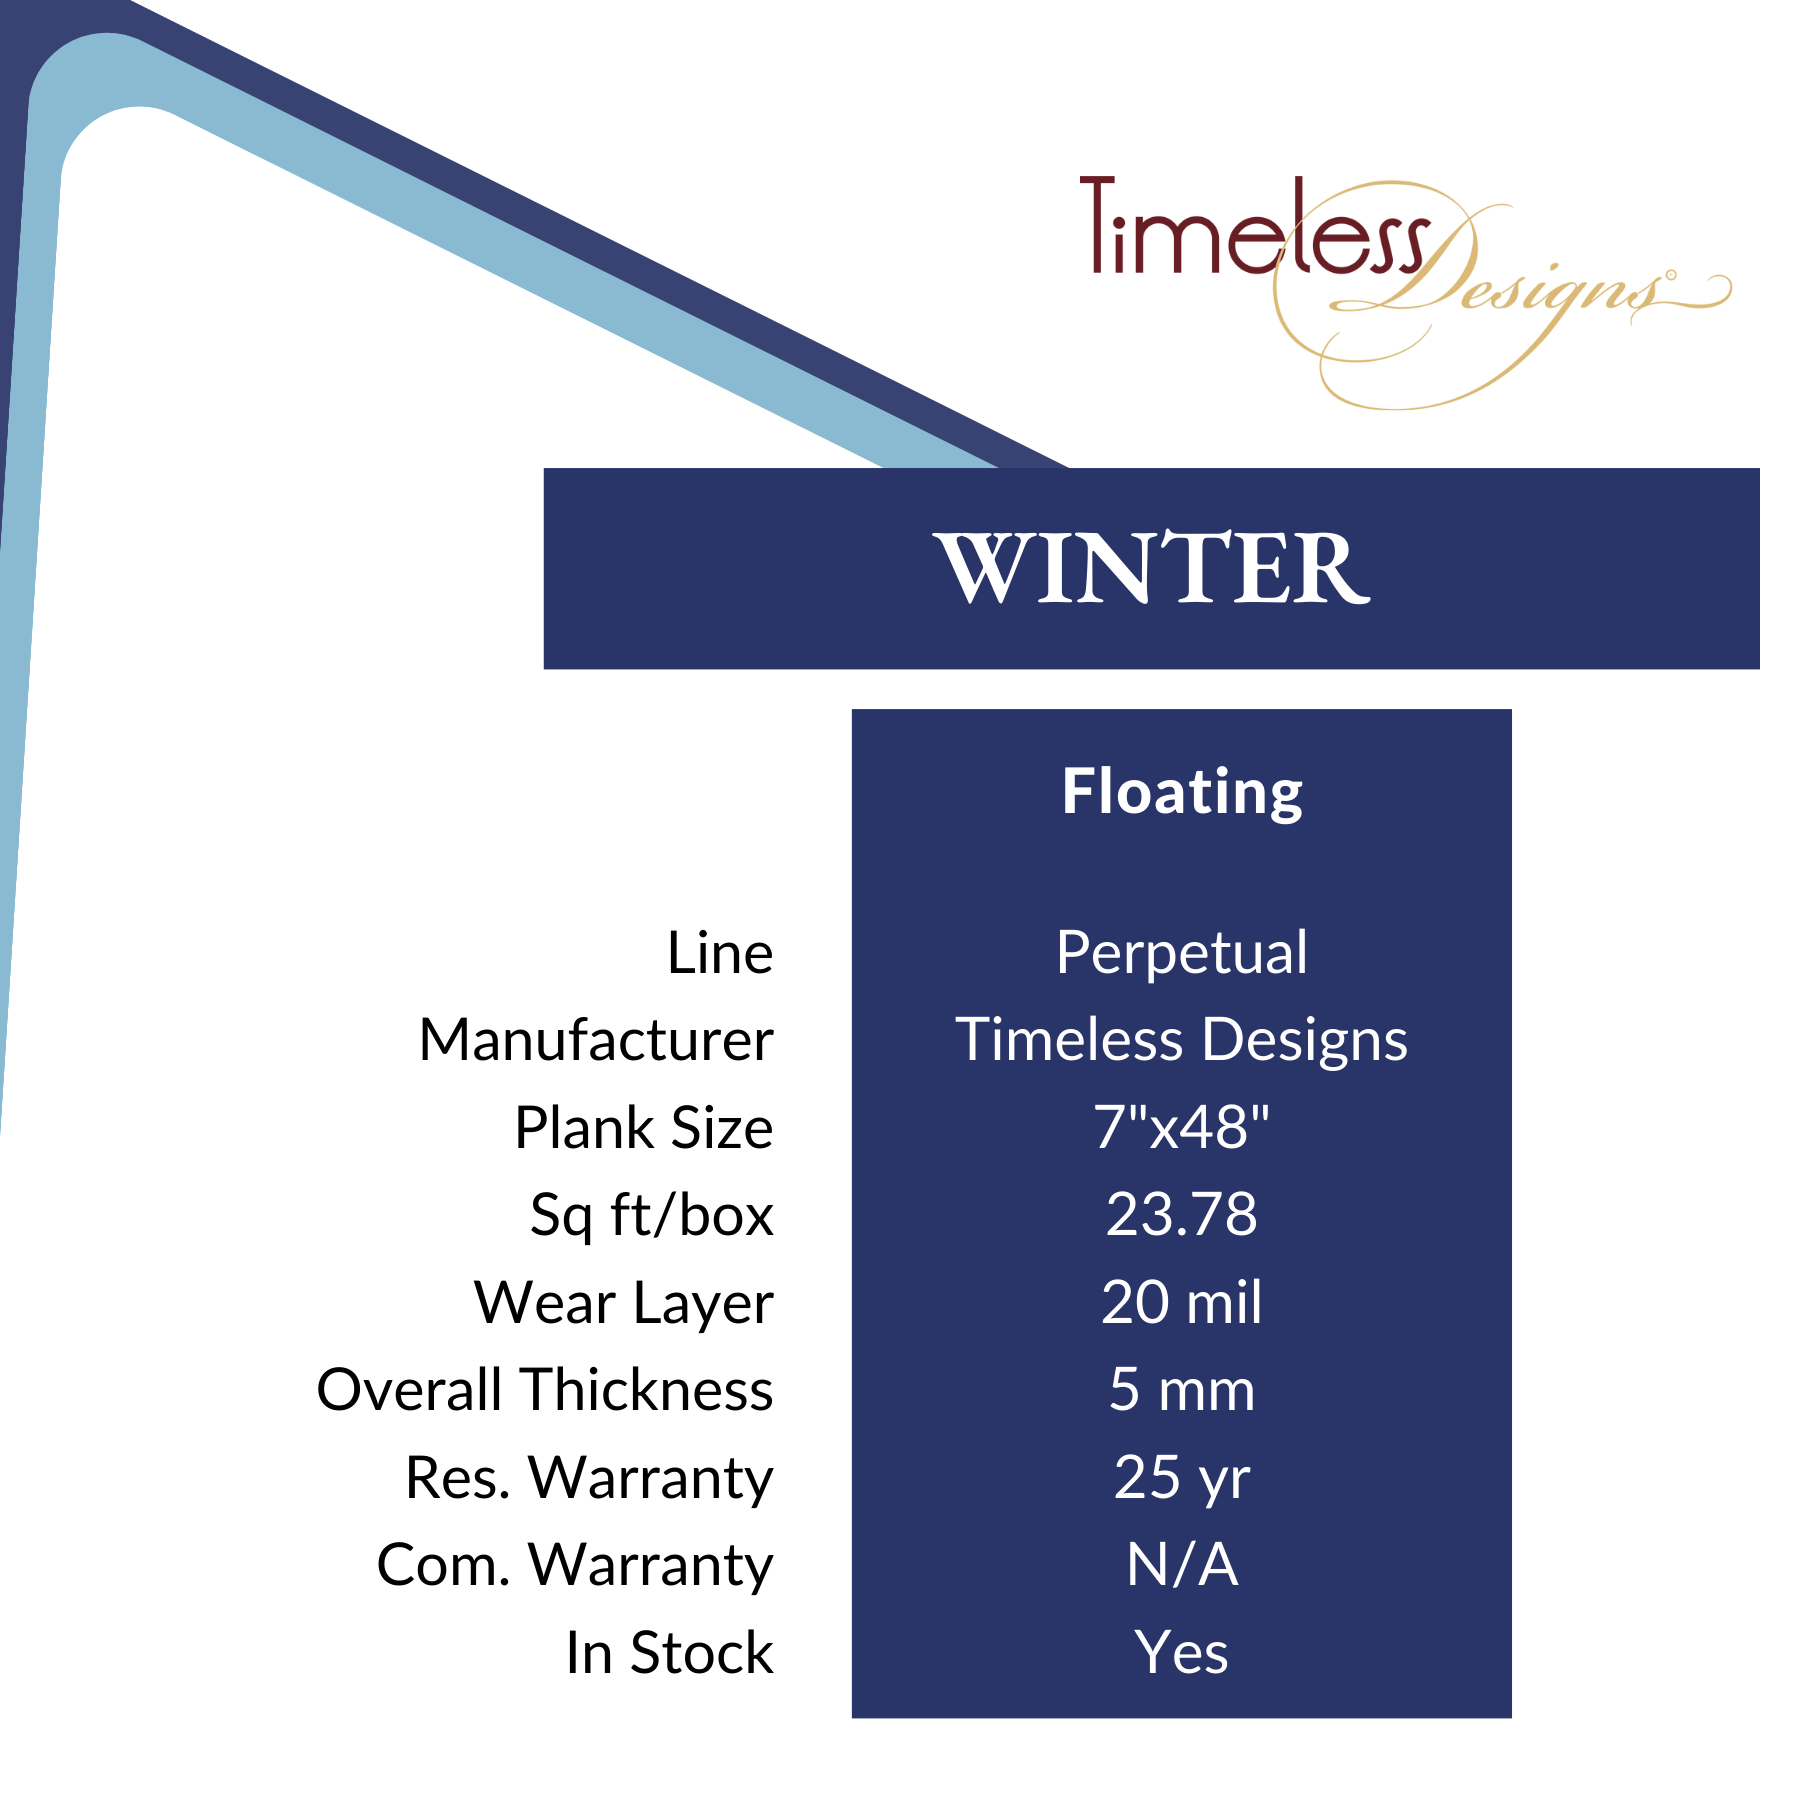 Winter by Timeless Designs, LVT Flooring from Calhoun's Specs 20 mil wear layer